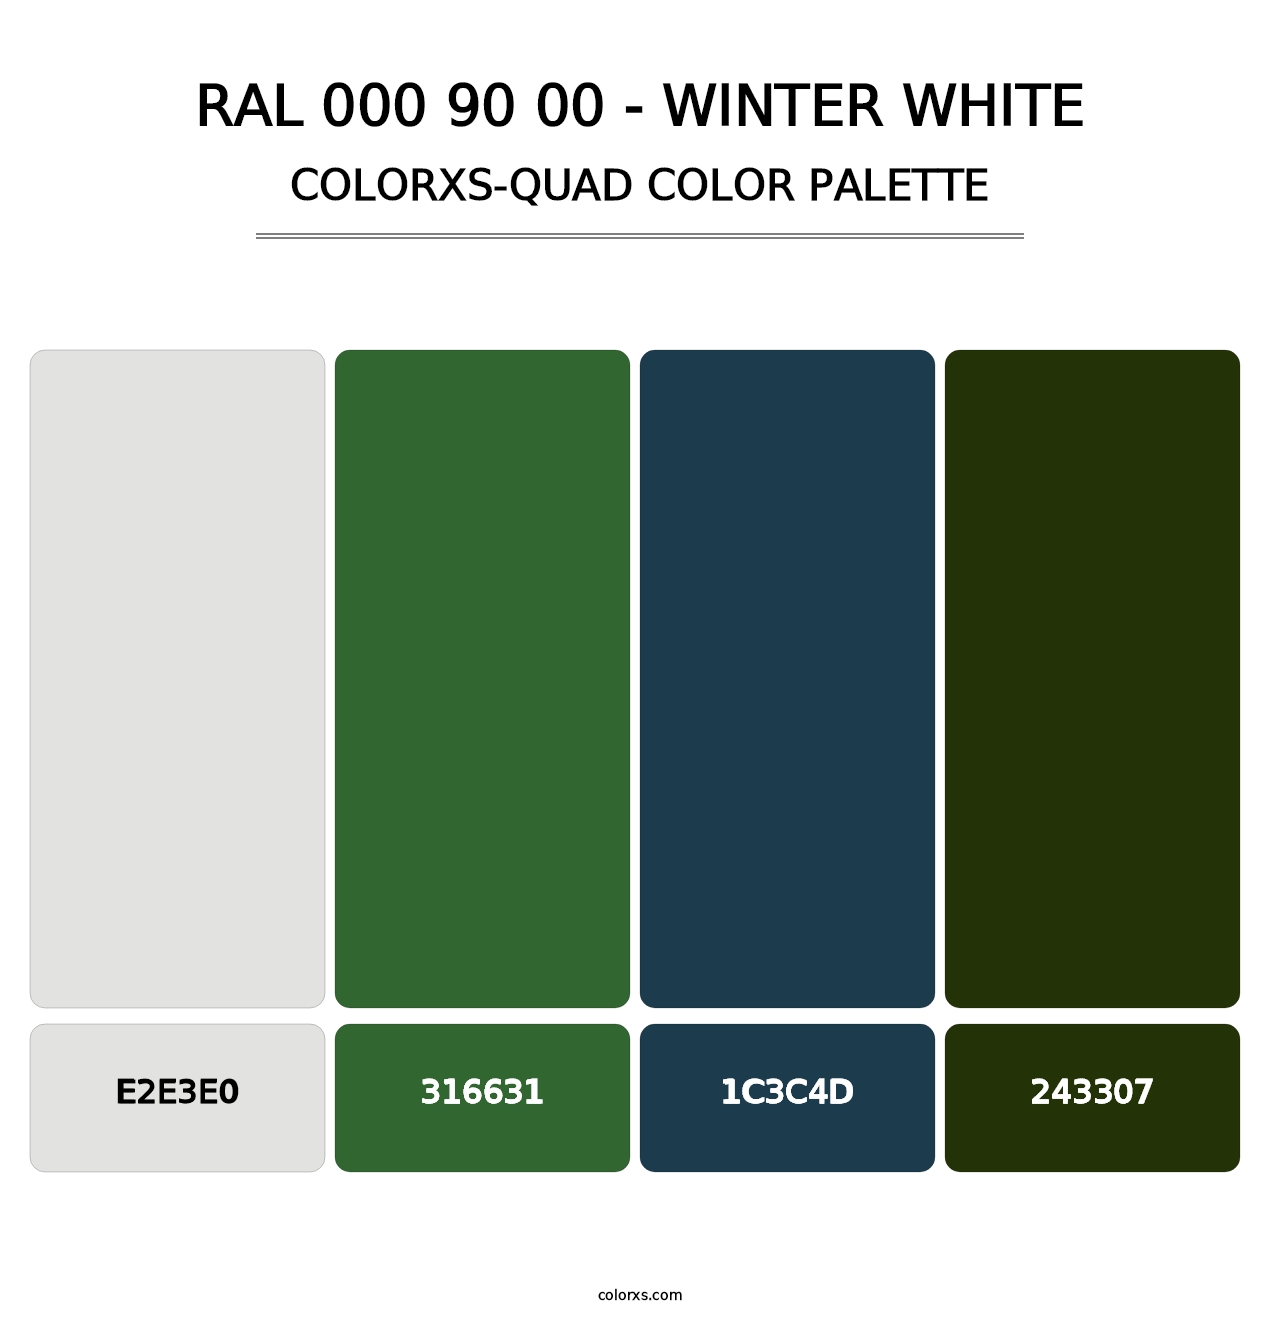 RAL 000 90 00 - Winter White - Colorxs Quad Palette